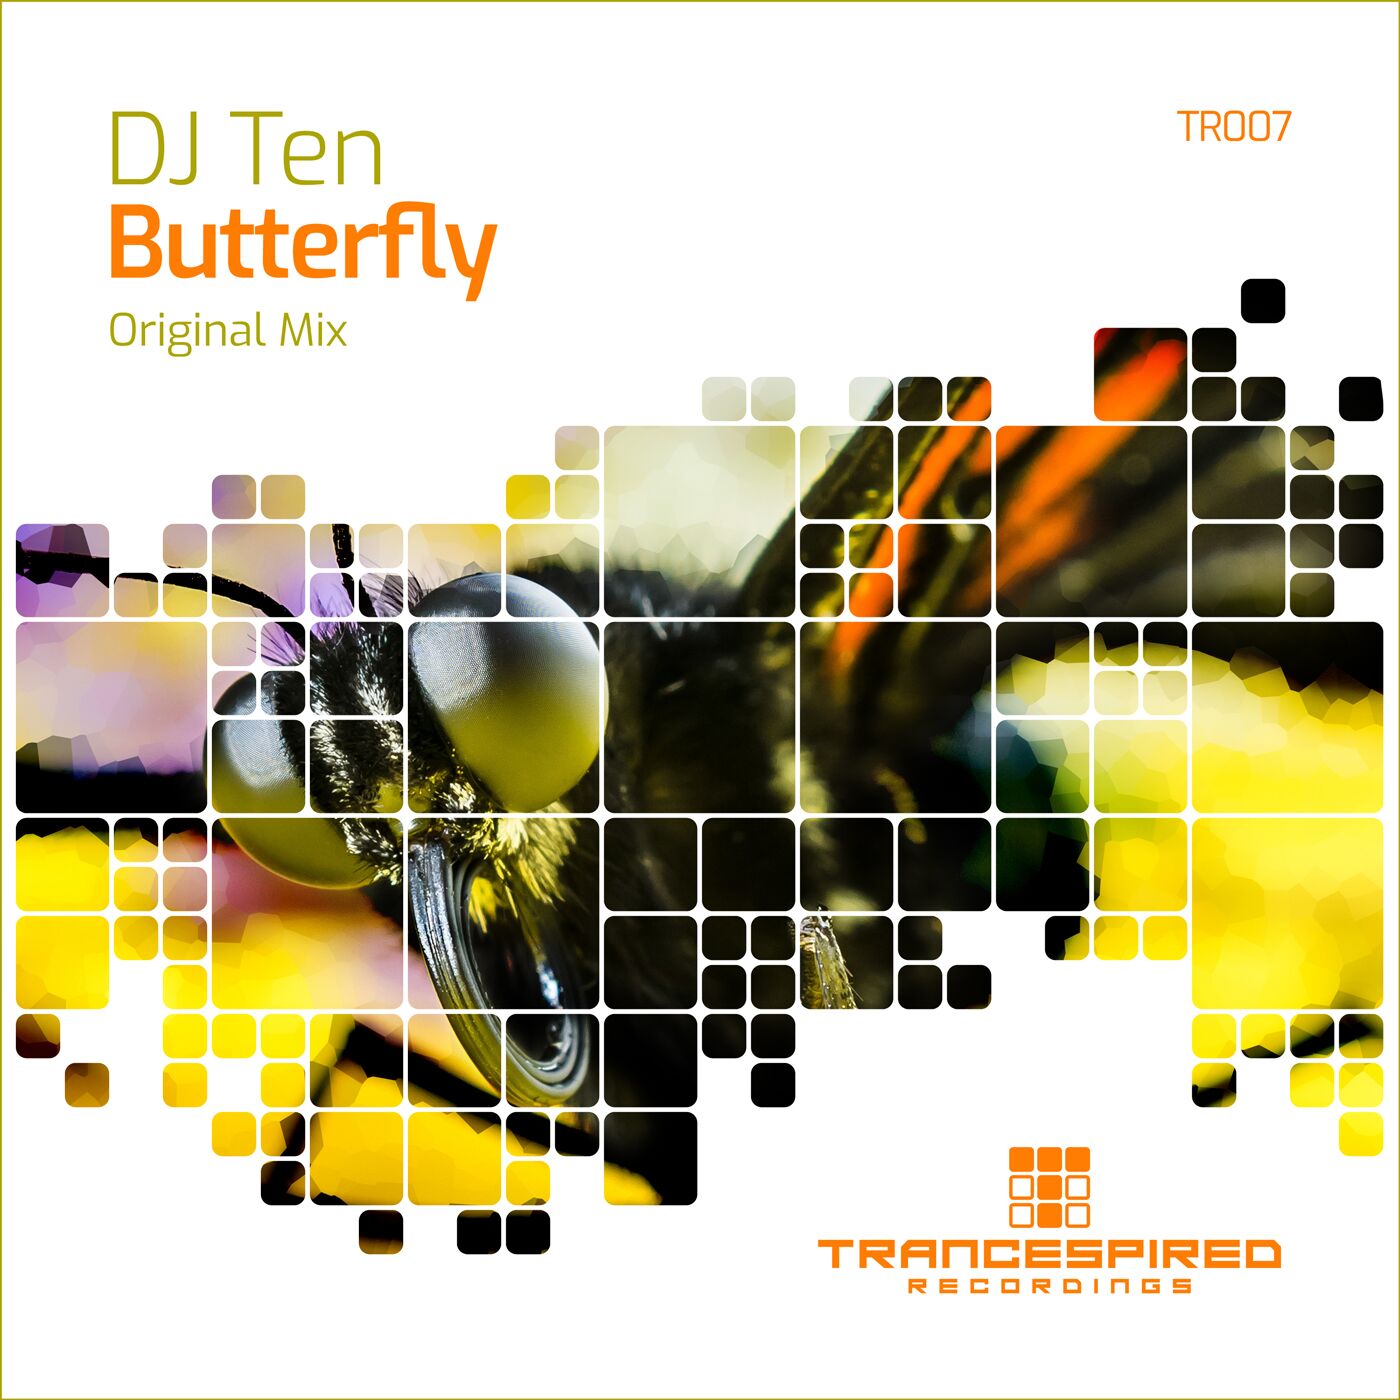 DJ Ten presents Butterfly on Trancespired Recordings